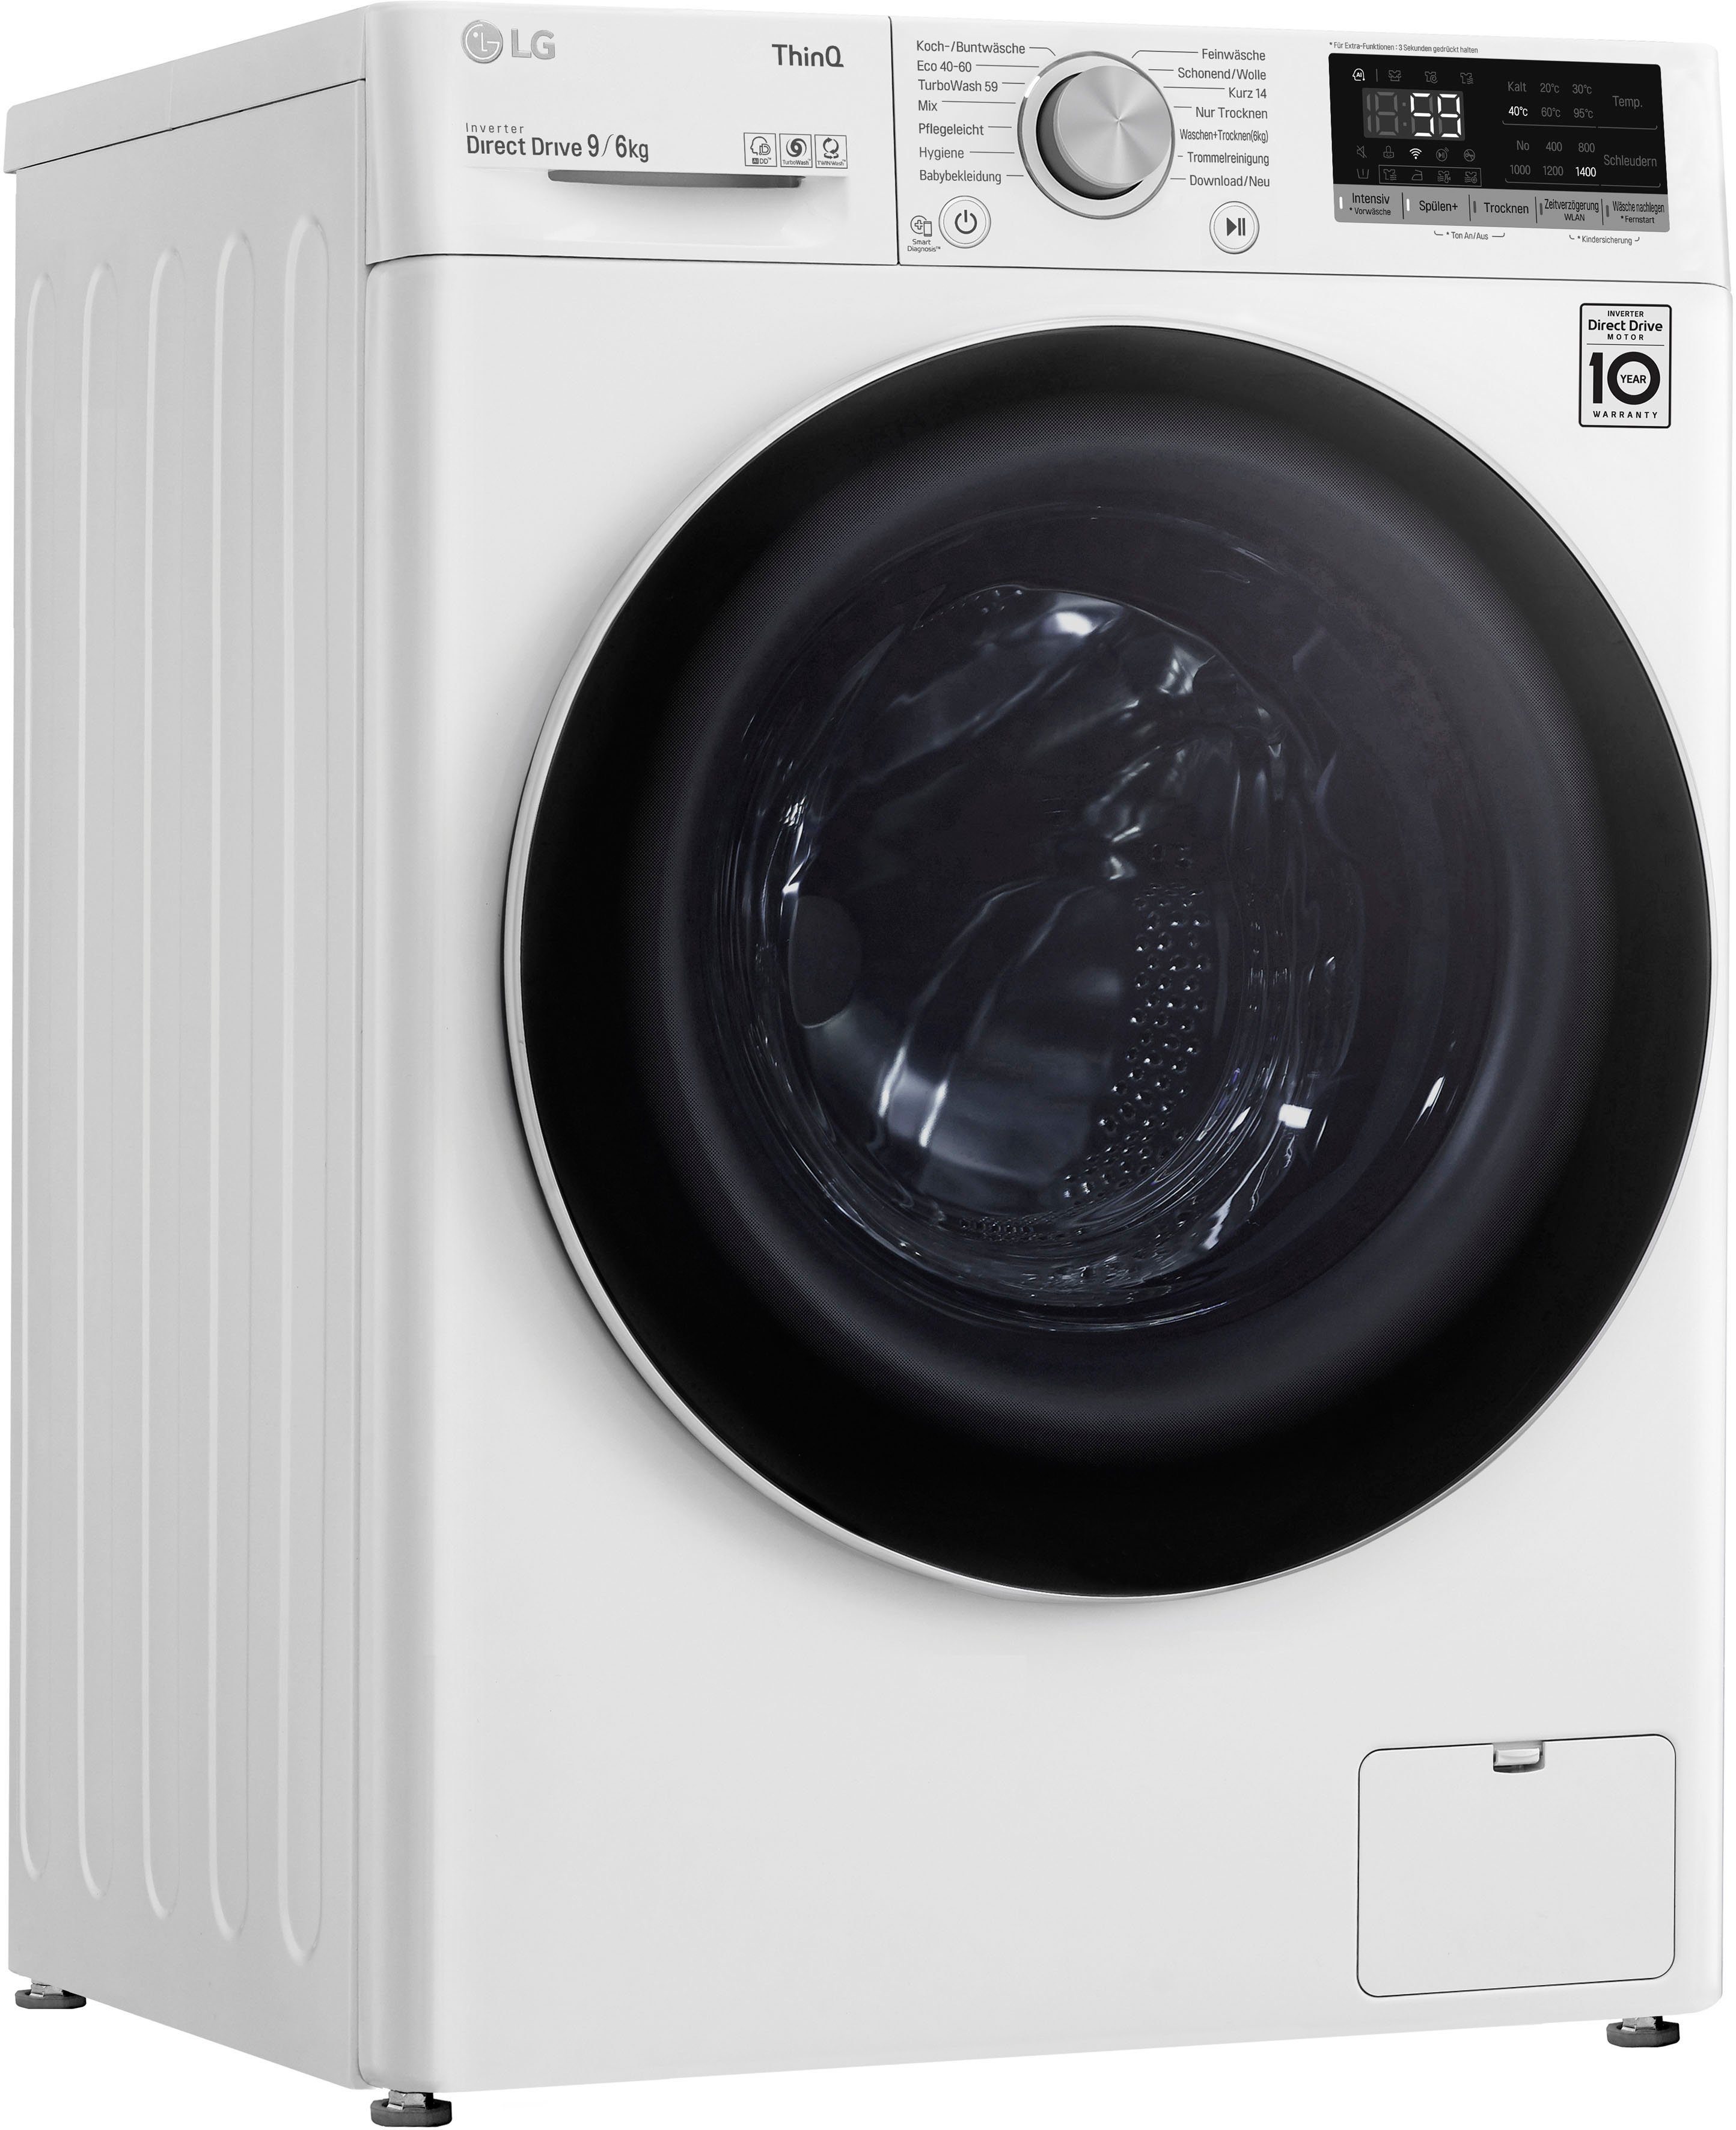 LG Waschtrockner 9/5kg Waschmaschine Trockner Frontlader Wäschetrockner Inverter 